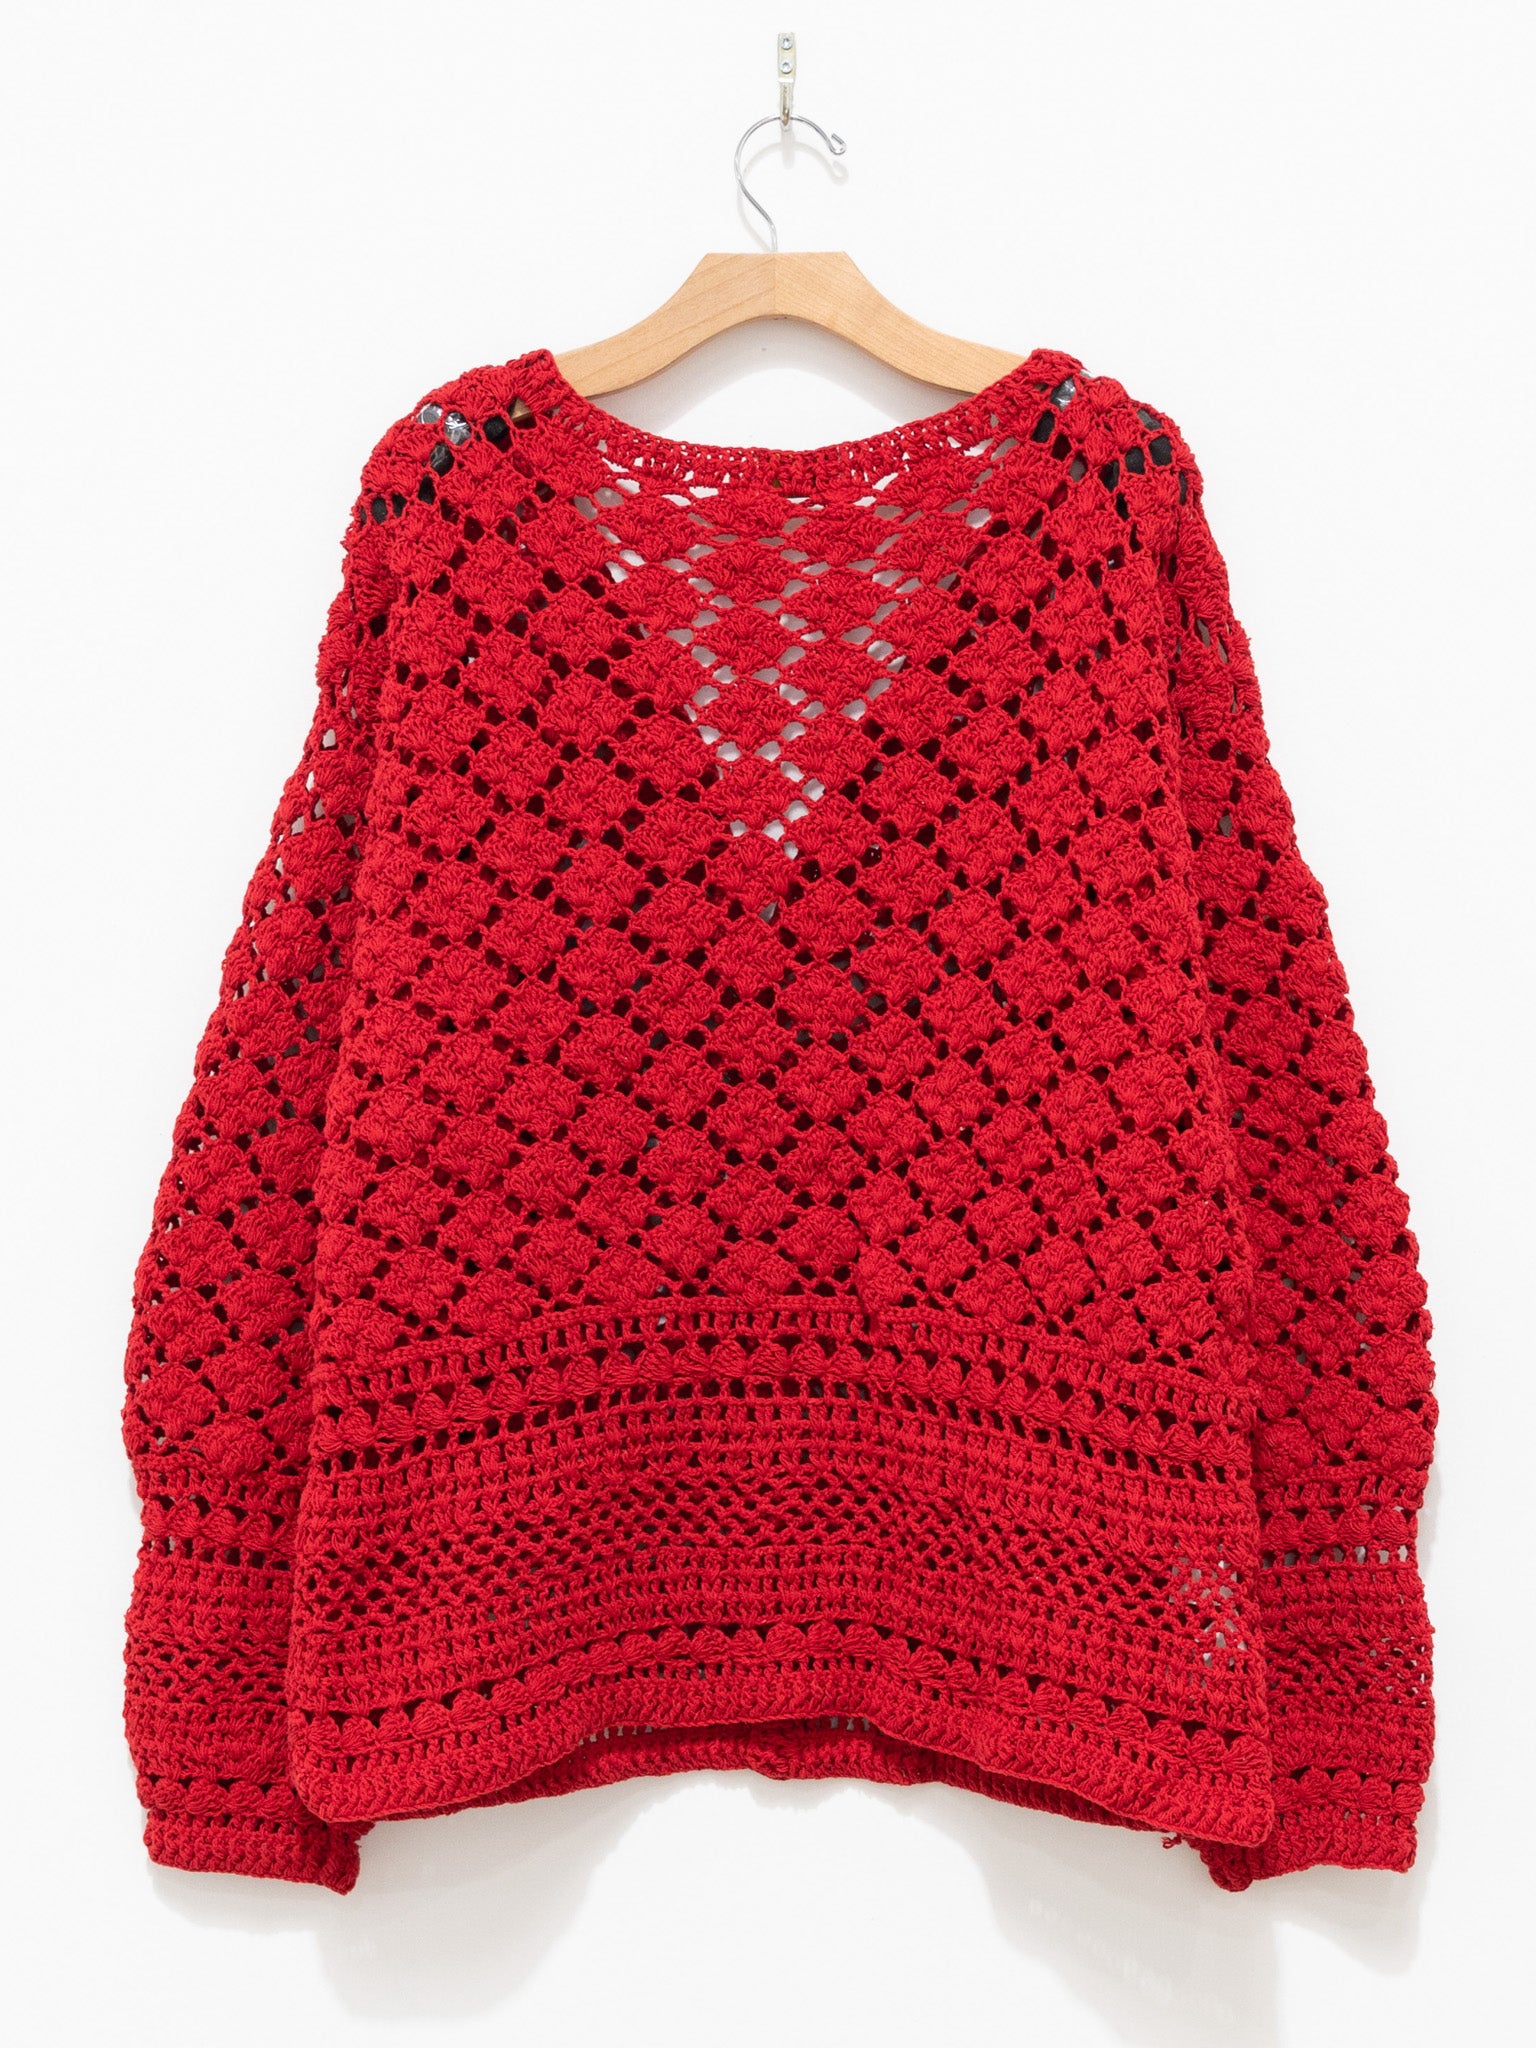 Namu Shop - Niche MacMahon Knitting Mills Crochet Cardigan - Red